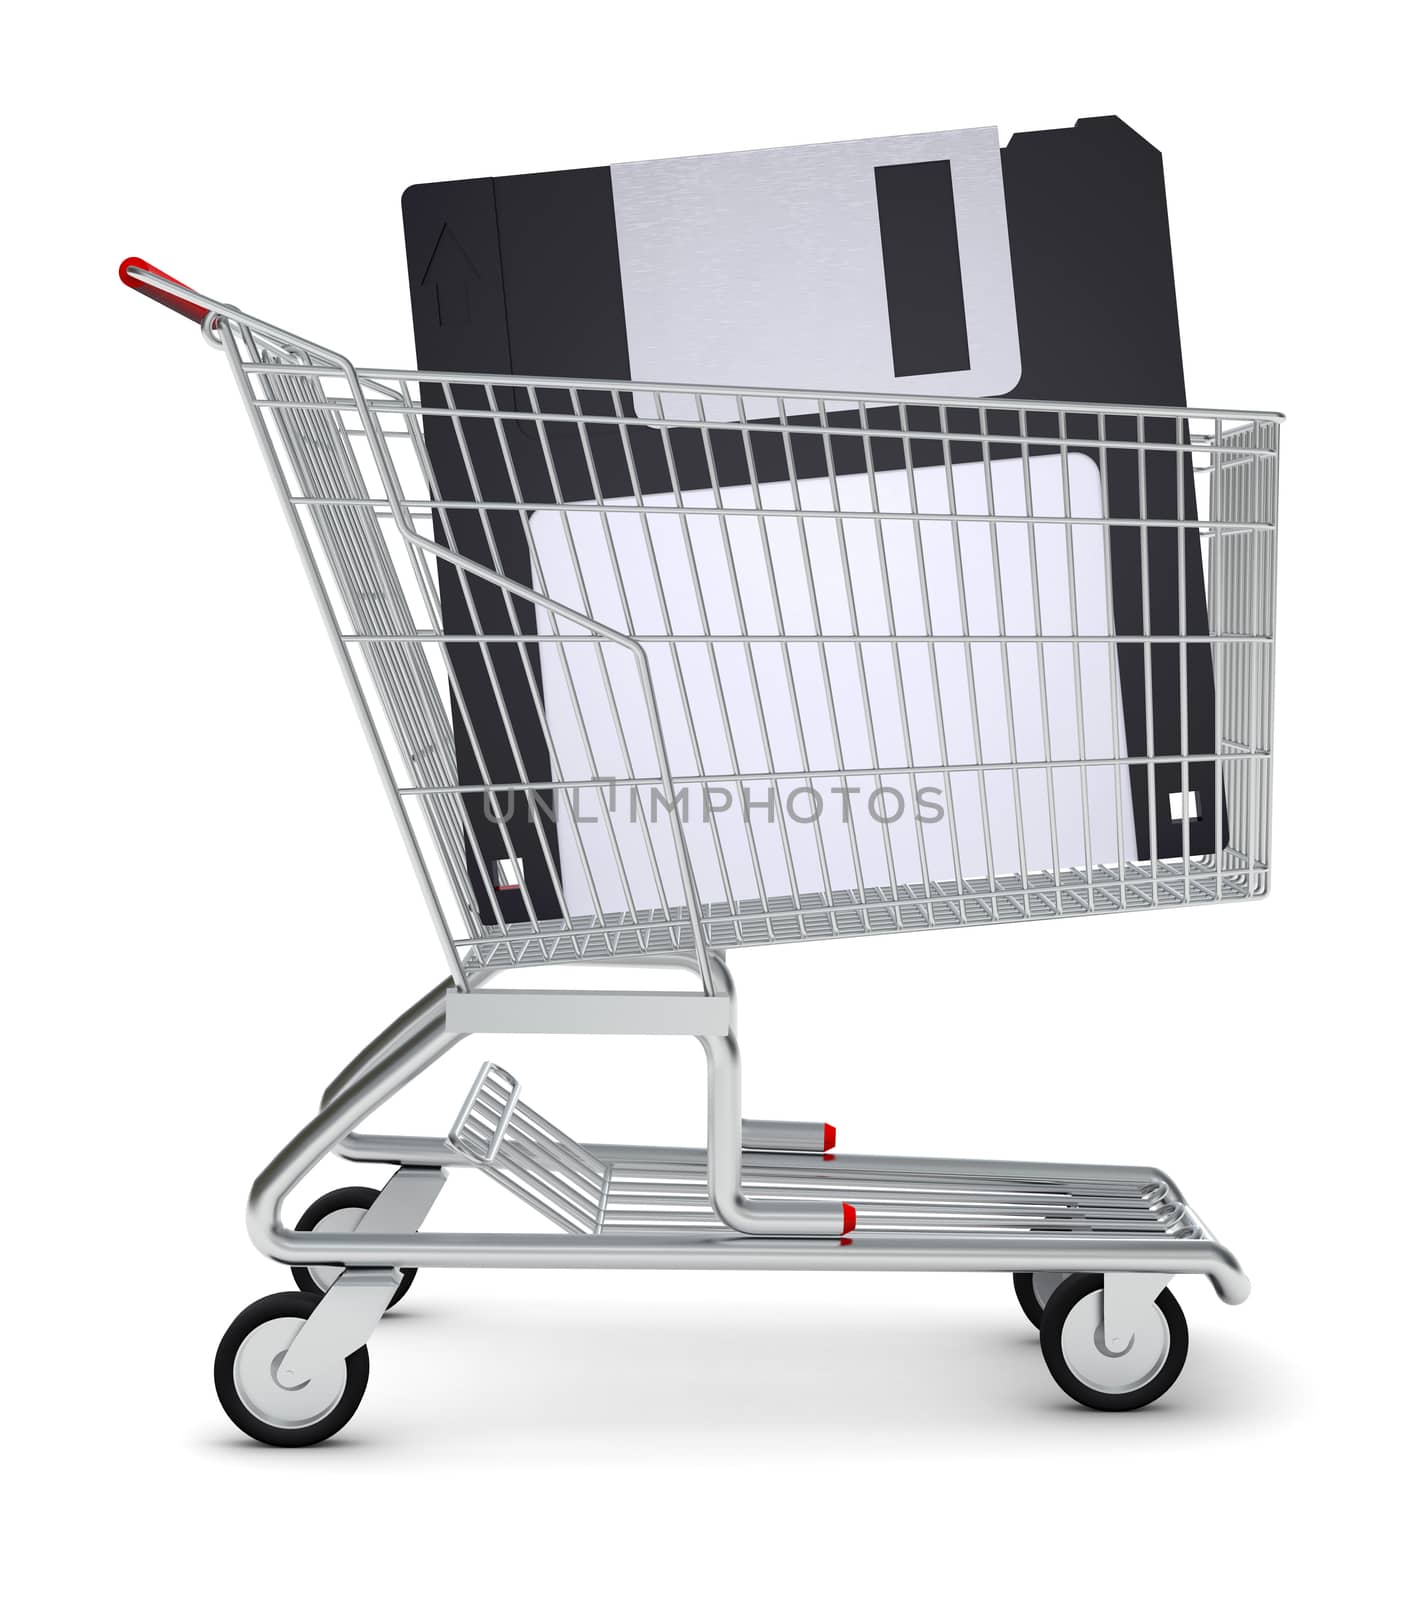 Floppy in shopping cart by cherezoff